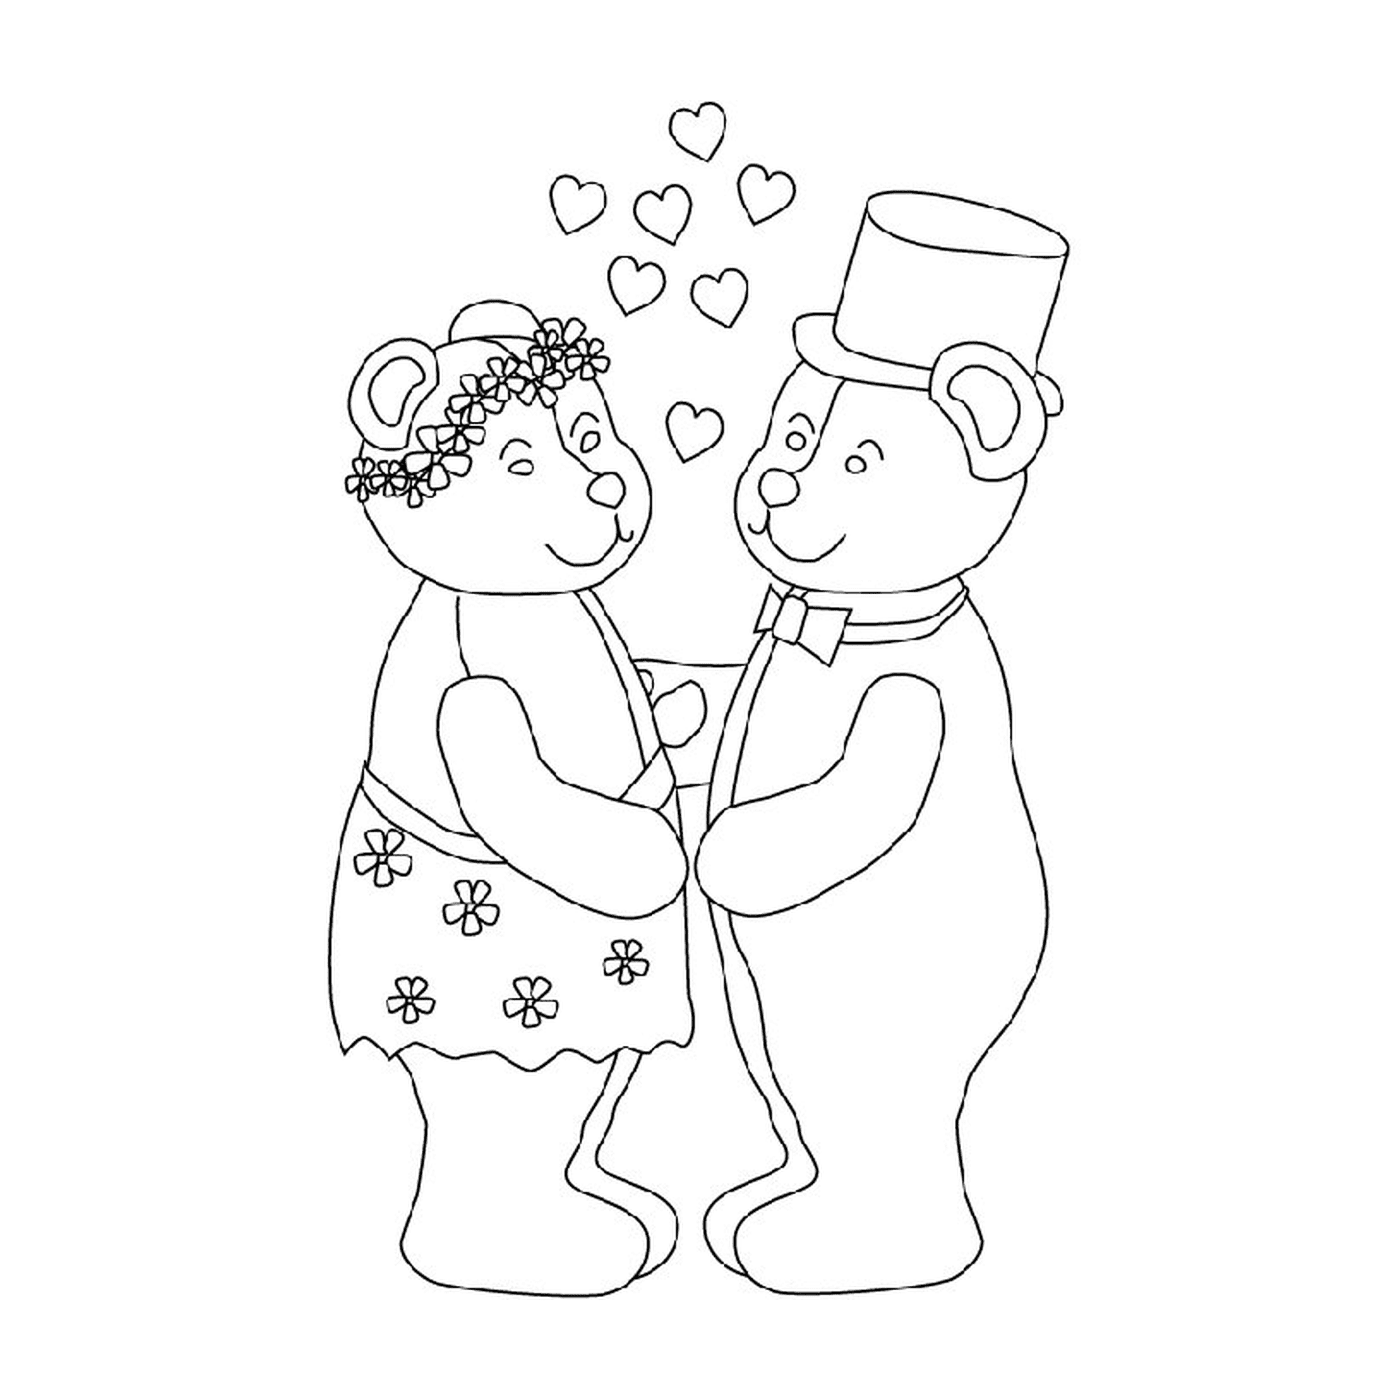  Marriage of teddy bears 